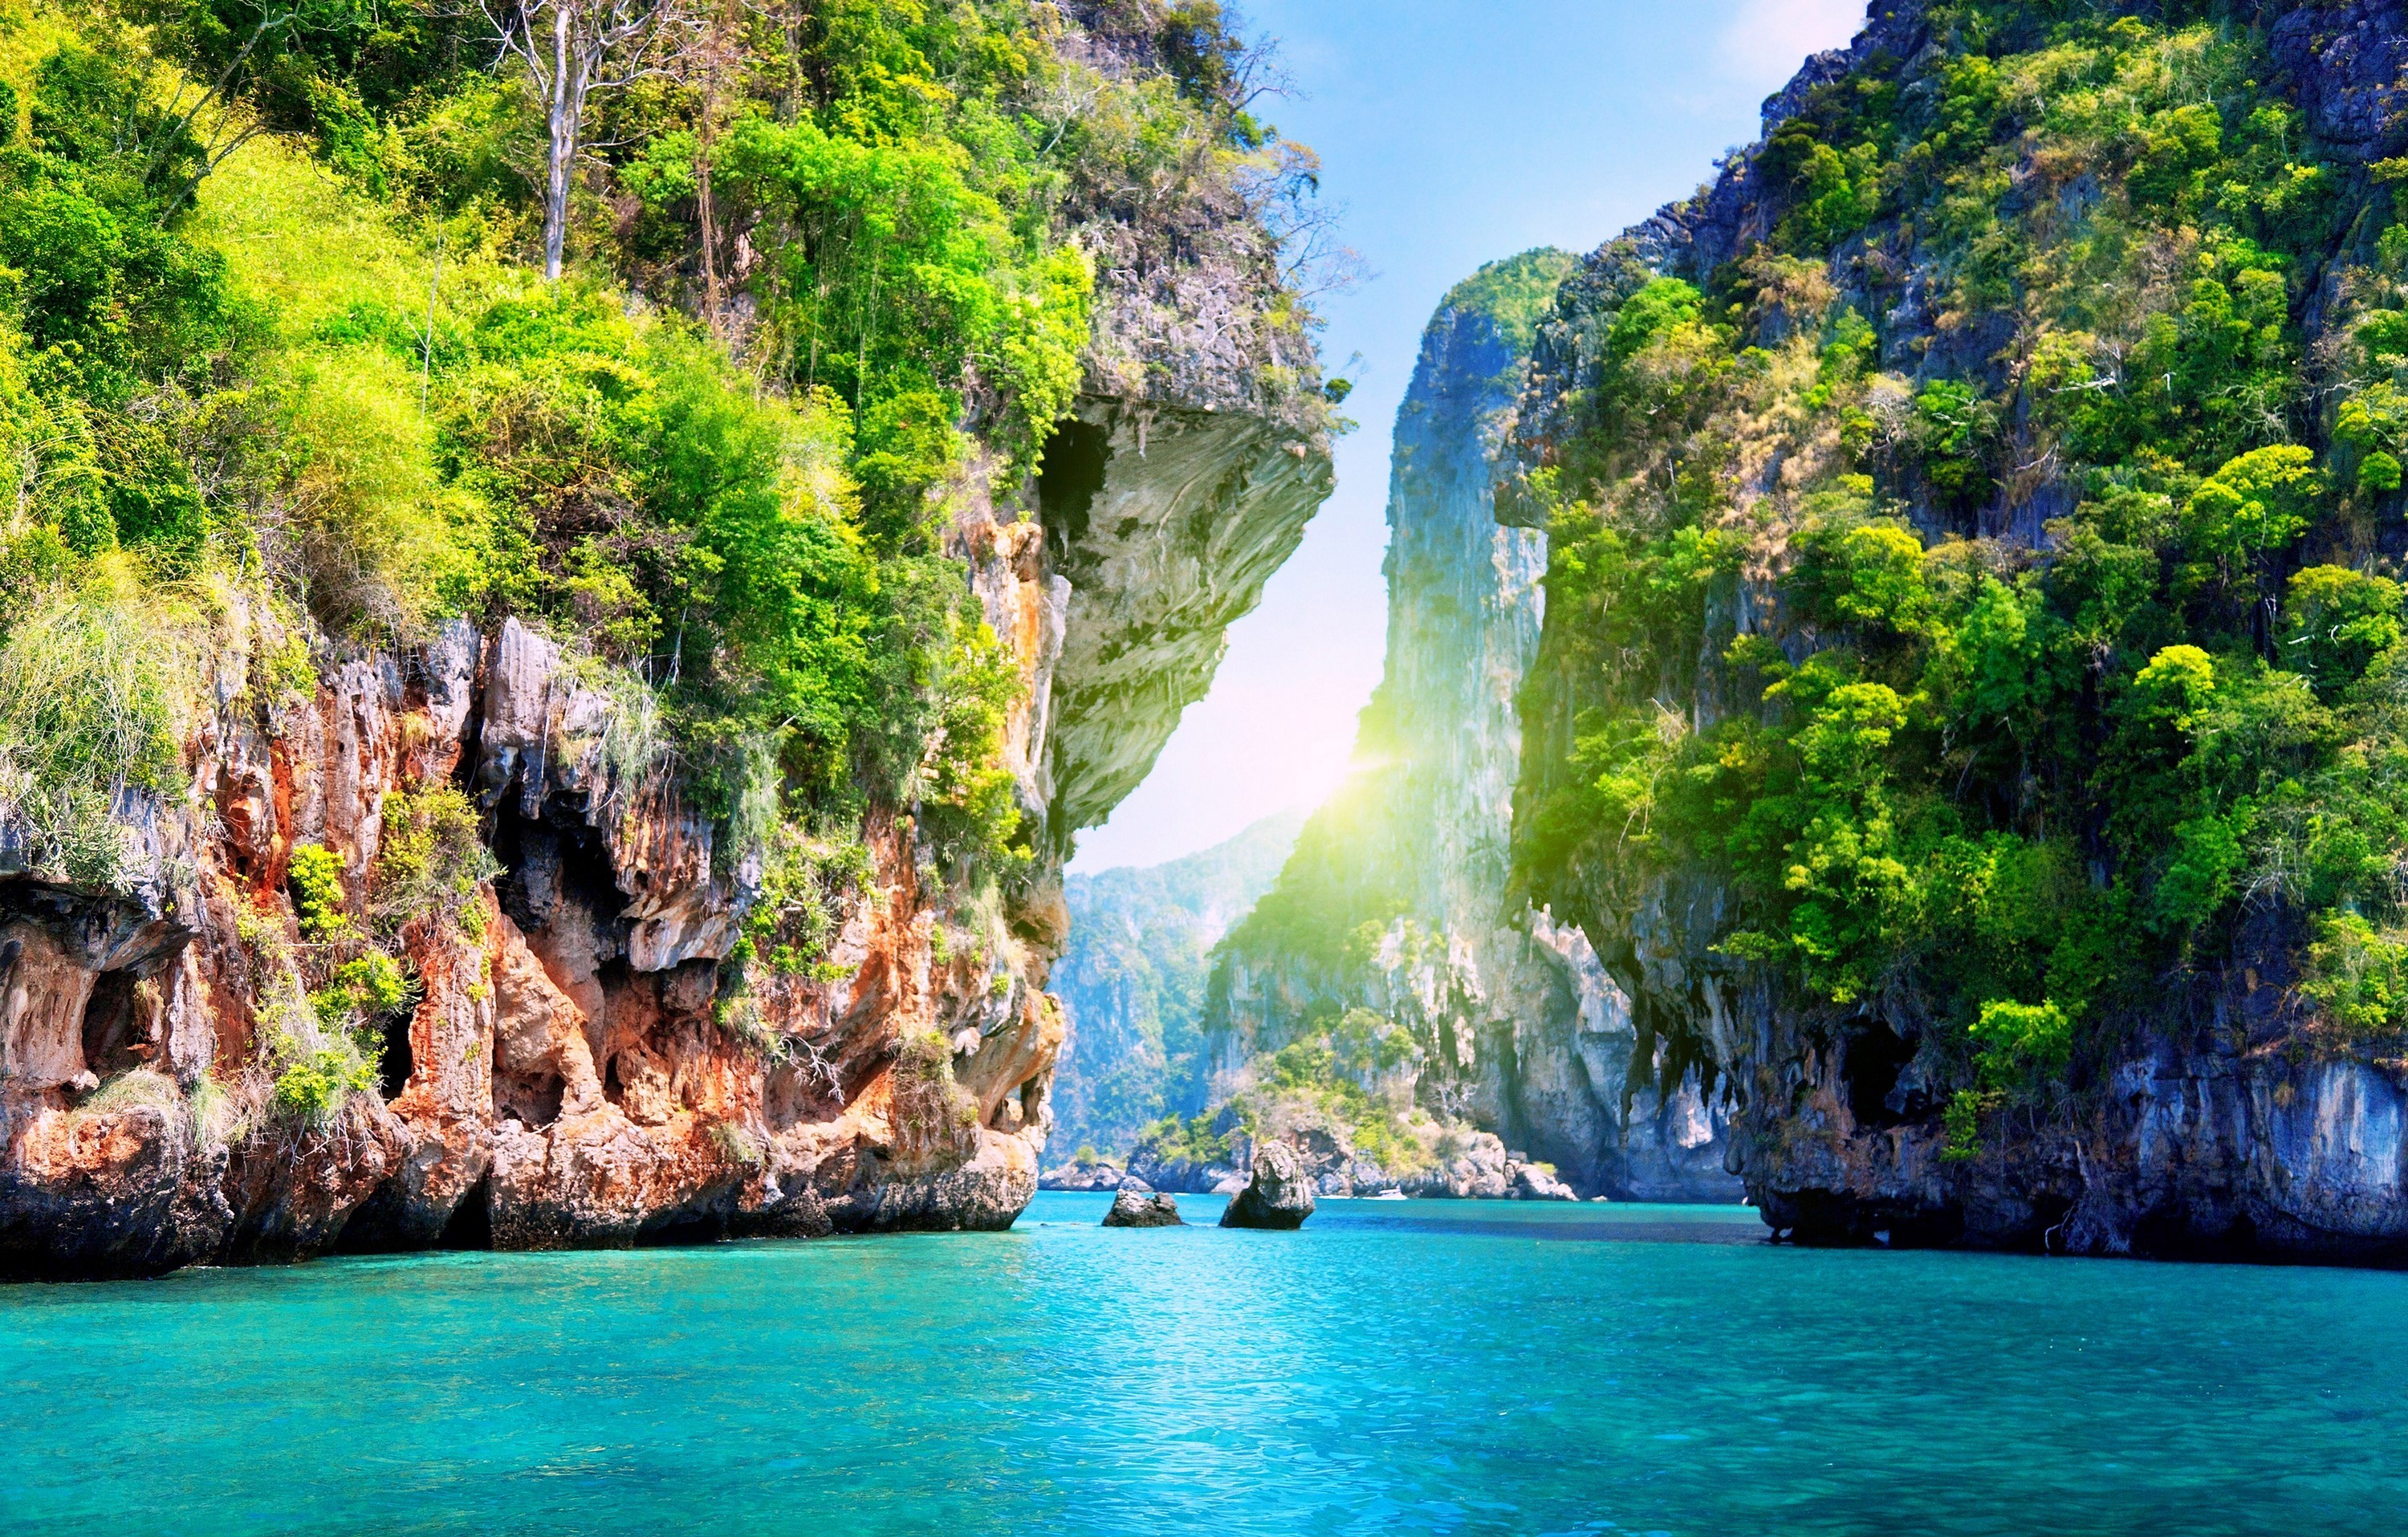 656875 descargar imagen sol, tailandia, tierra/naturaleza, laguna, bahía, zona tropical: fondos de pantalla y protectores de pantalla gratis